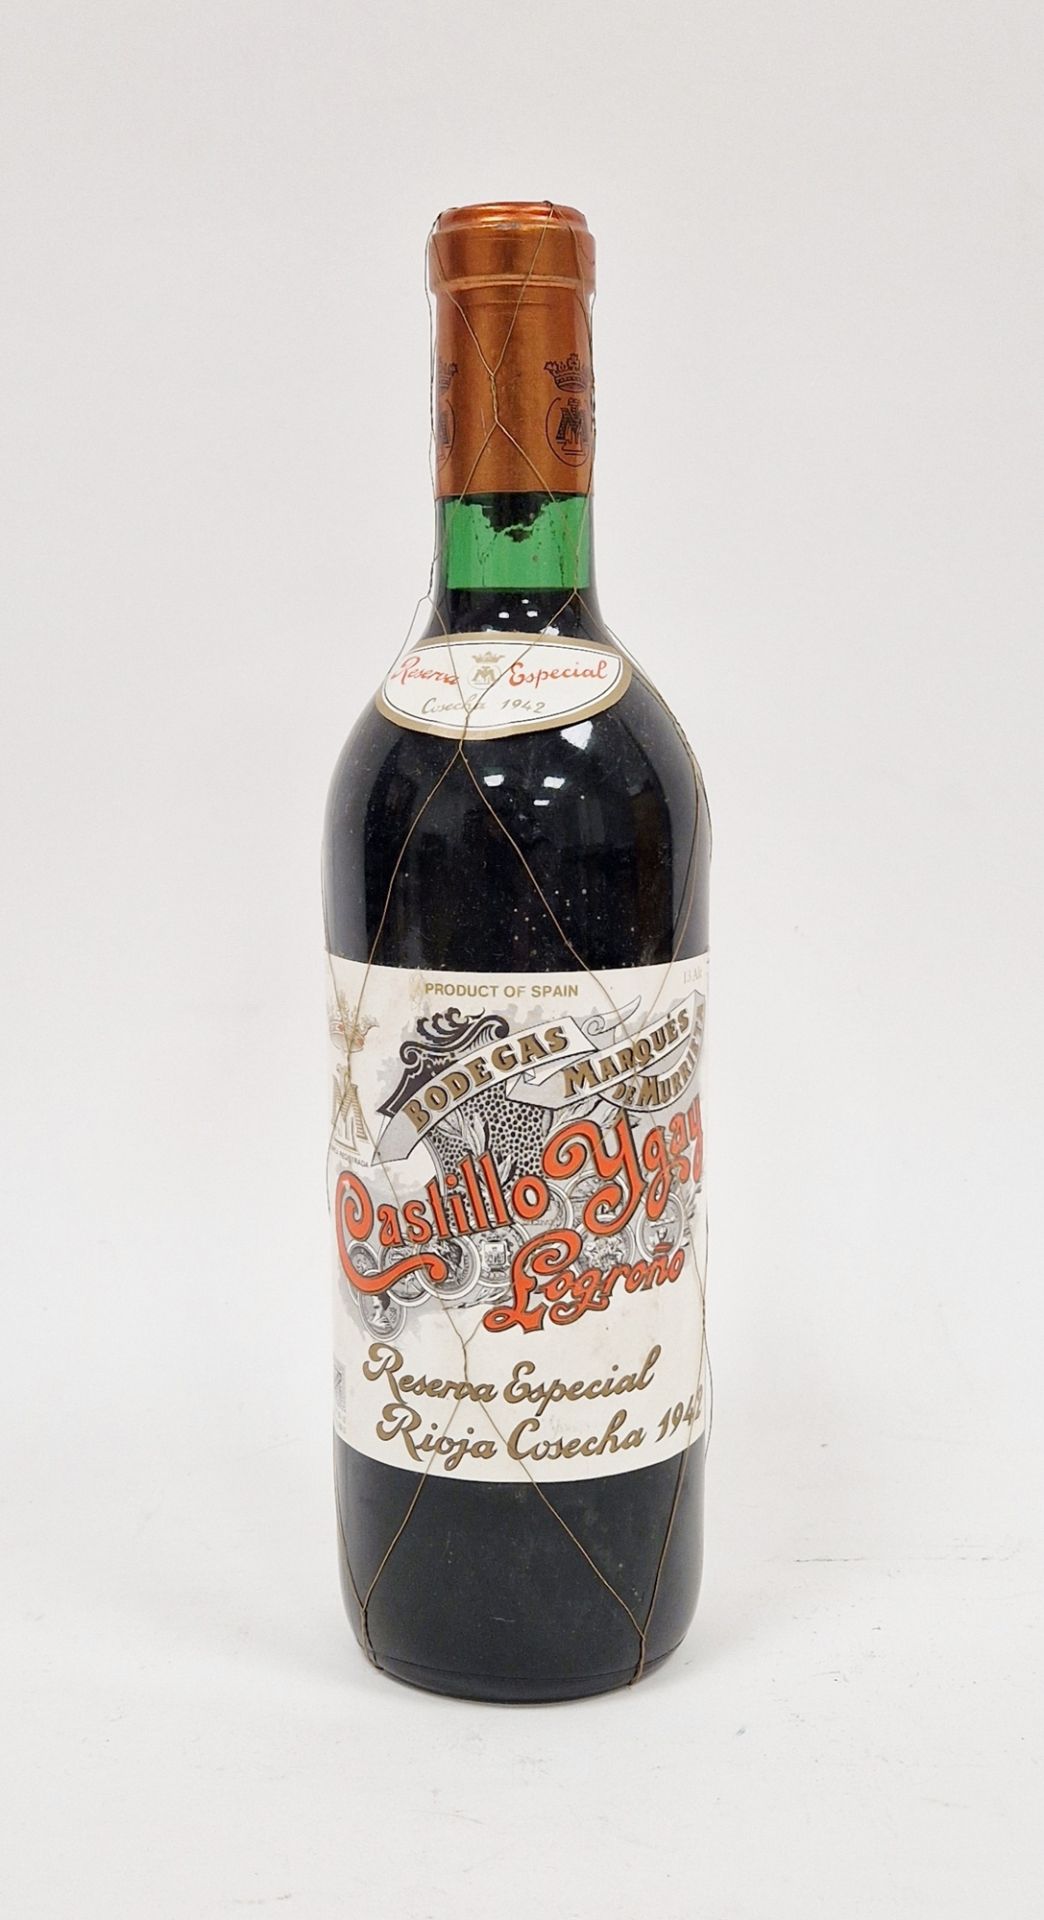 Bottle of Bodegas Marques de Murrieta Castillo Ygay Reserva Especial 1942 (high shoulder)